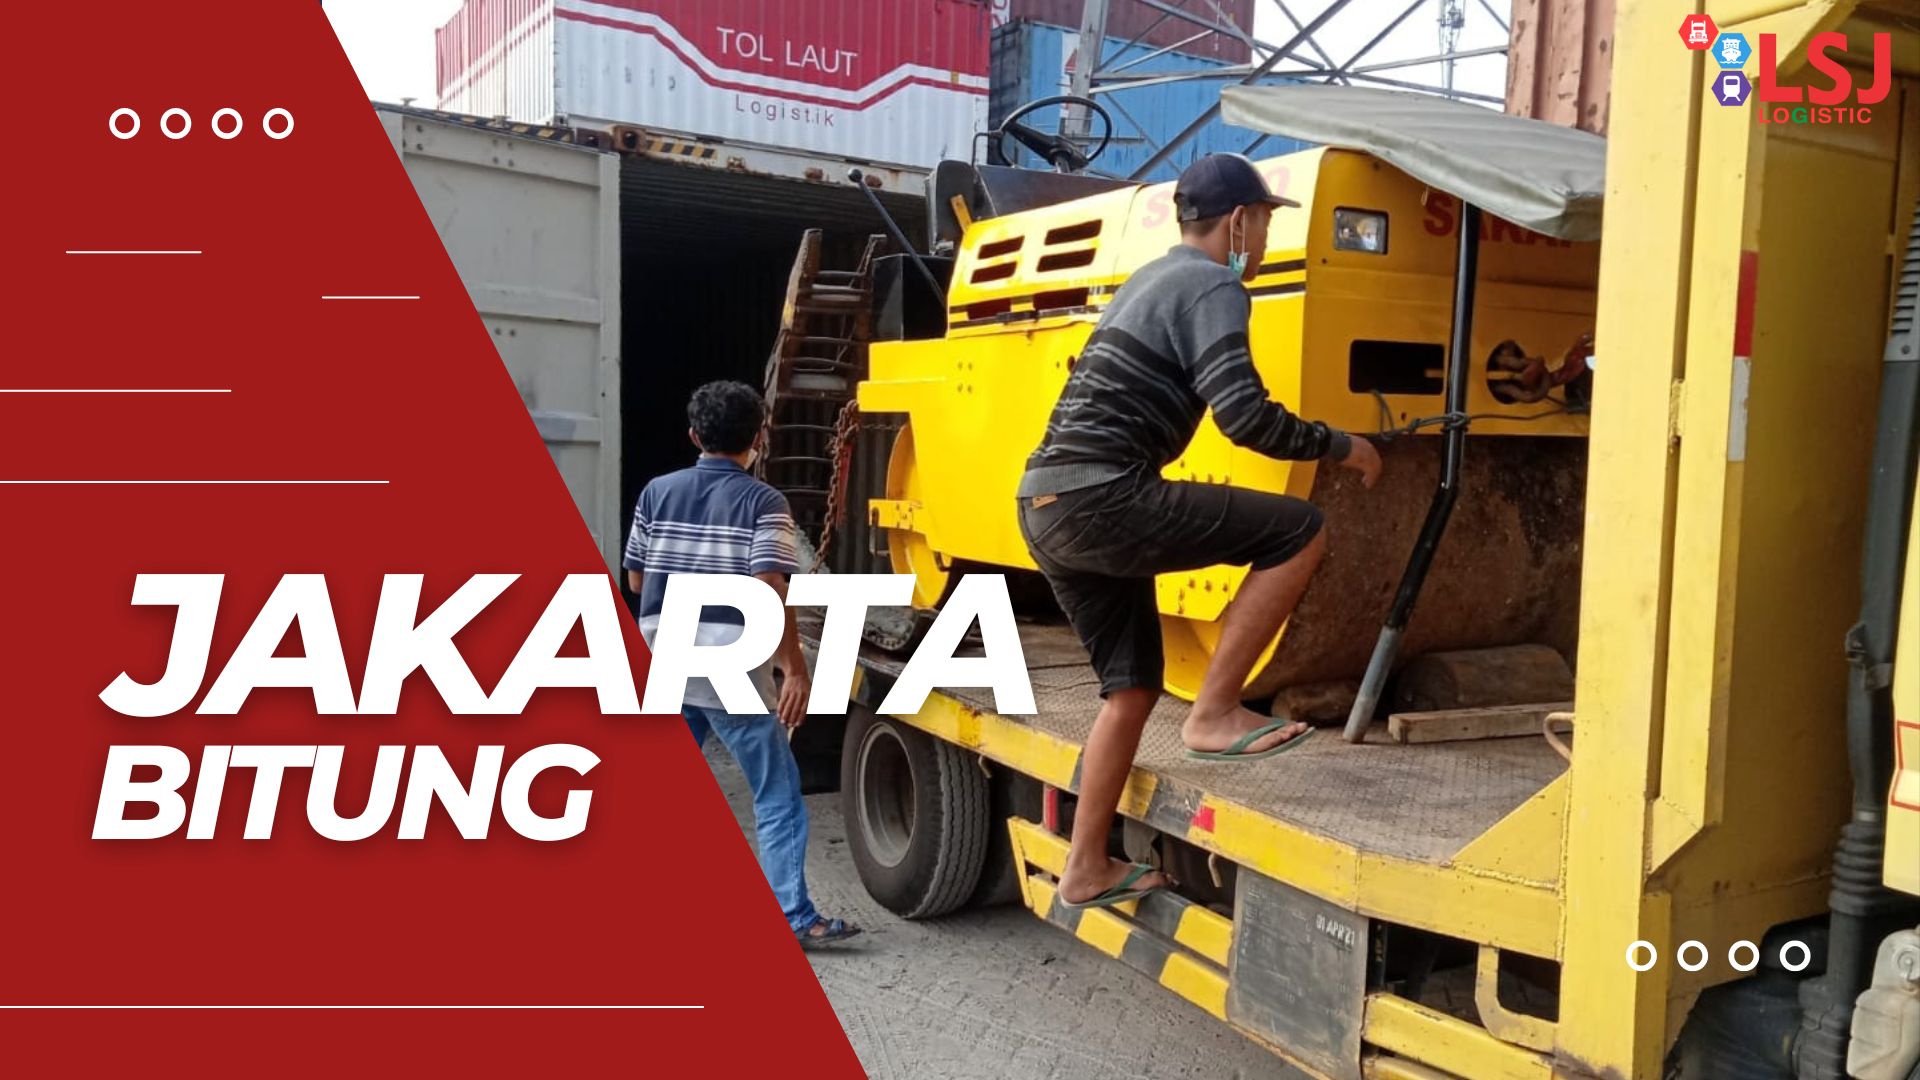 Ongkos Kirim Container Jakarta Bitung